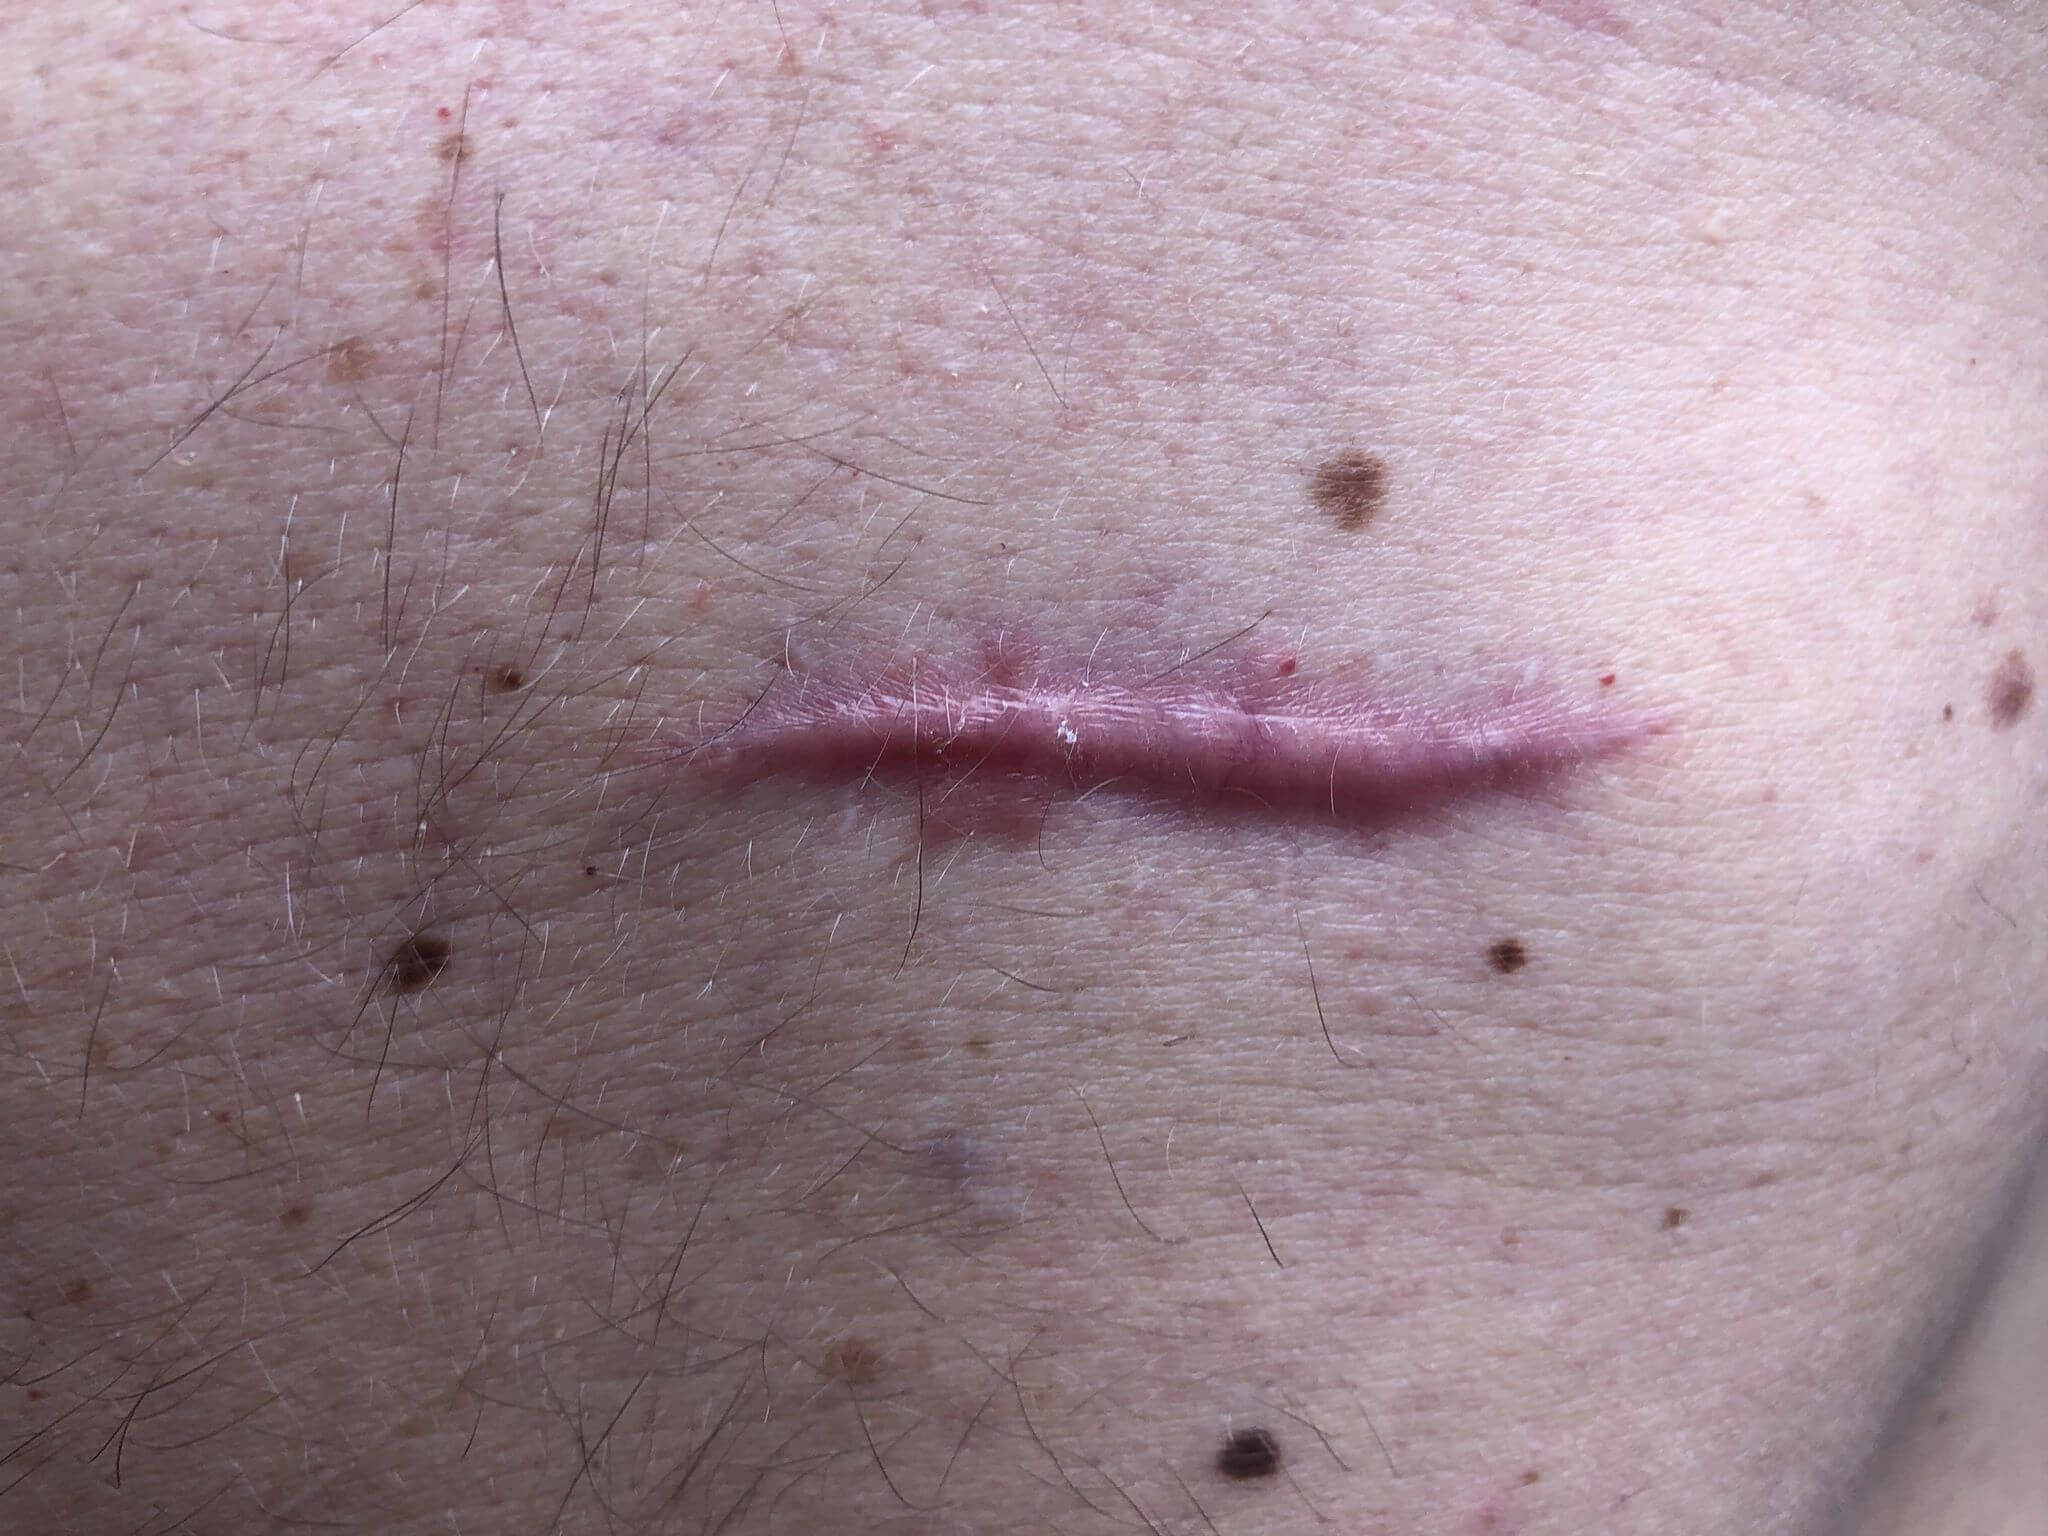 Malignant melanoma in situ chest scar tissue 42 year old male Sweden